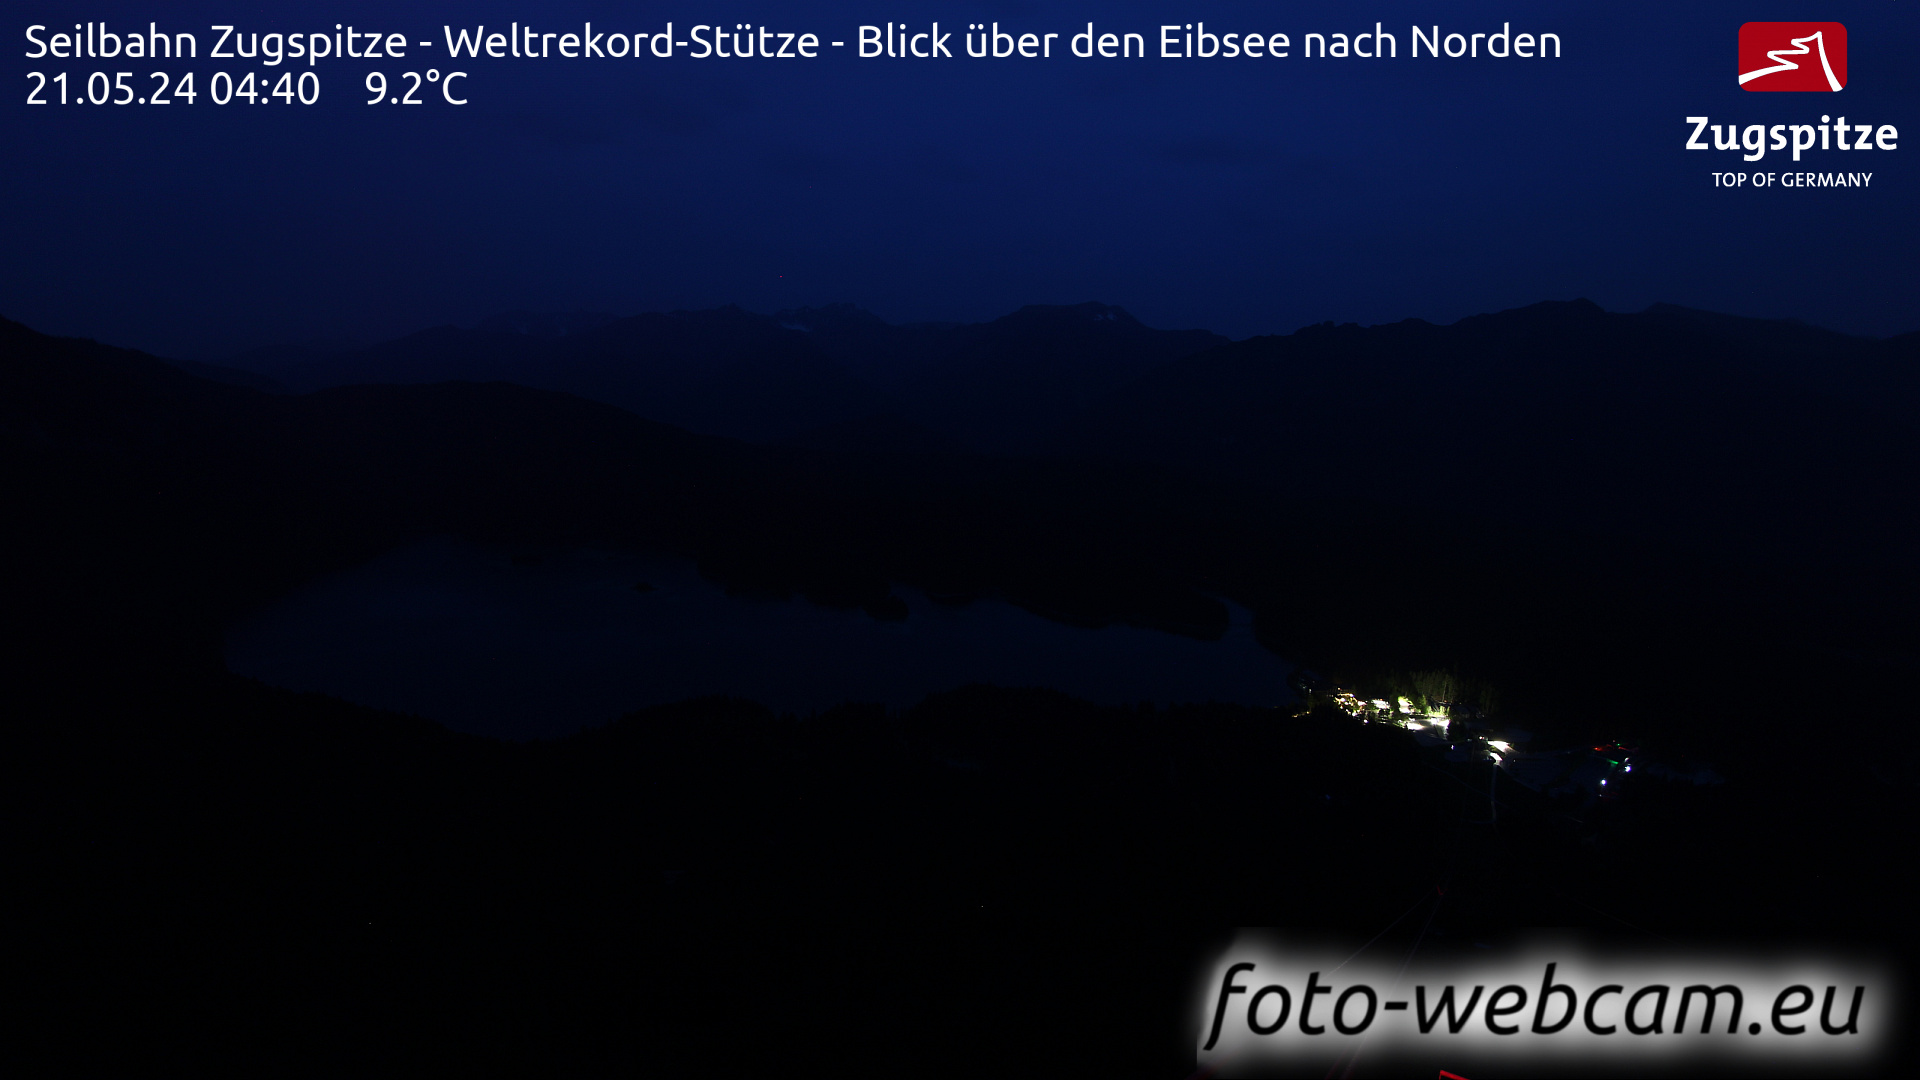 Zugspitze Ma. 04:49